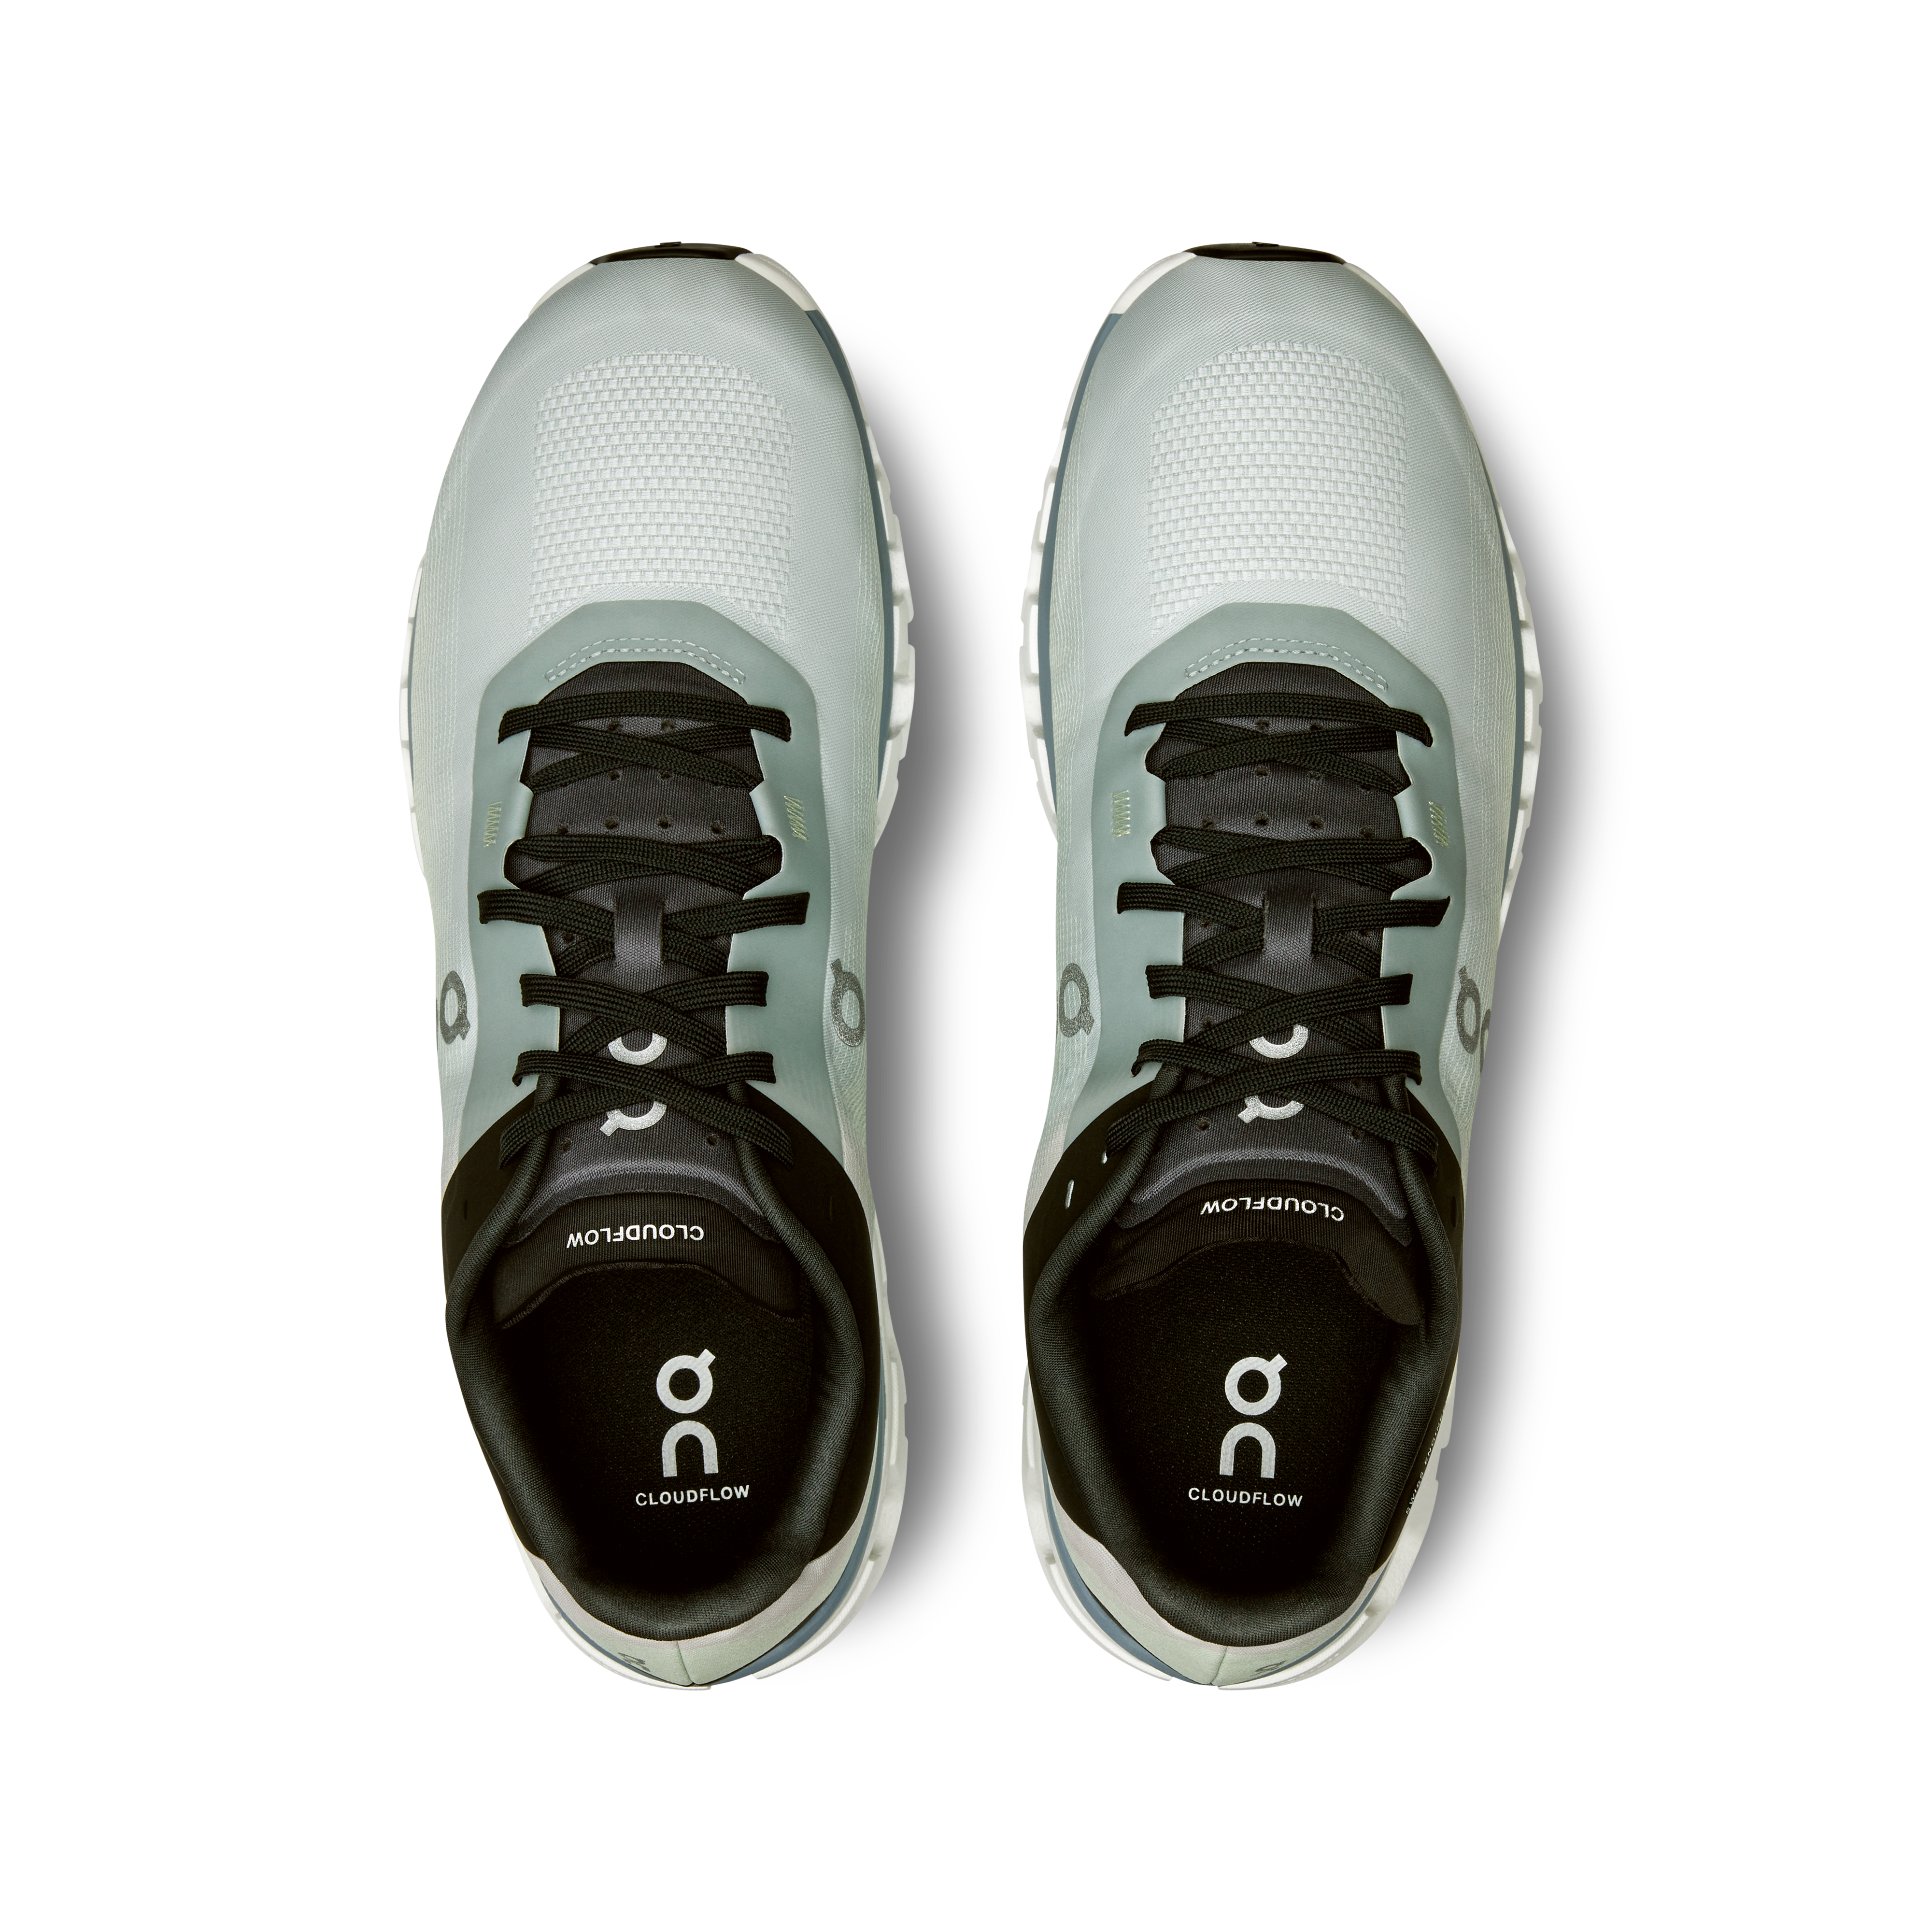  ON Cloudflow 4 Men's Road Running Shoes Sneakers (Black/Storm,  US Footwear Size System, Adult, Men, Numeric, Medium, 10.5)